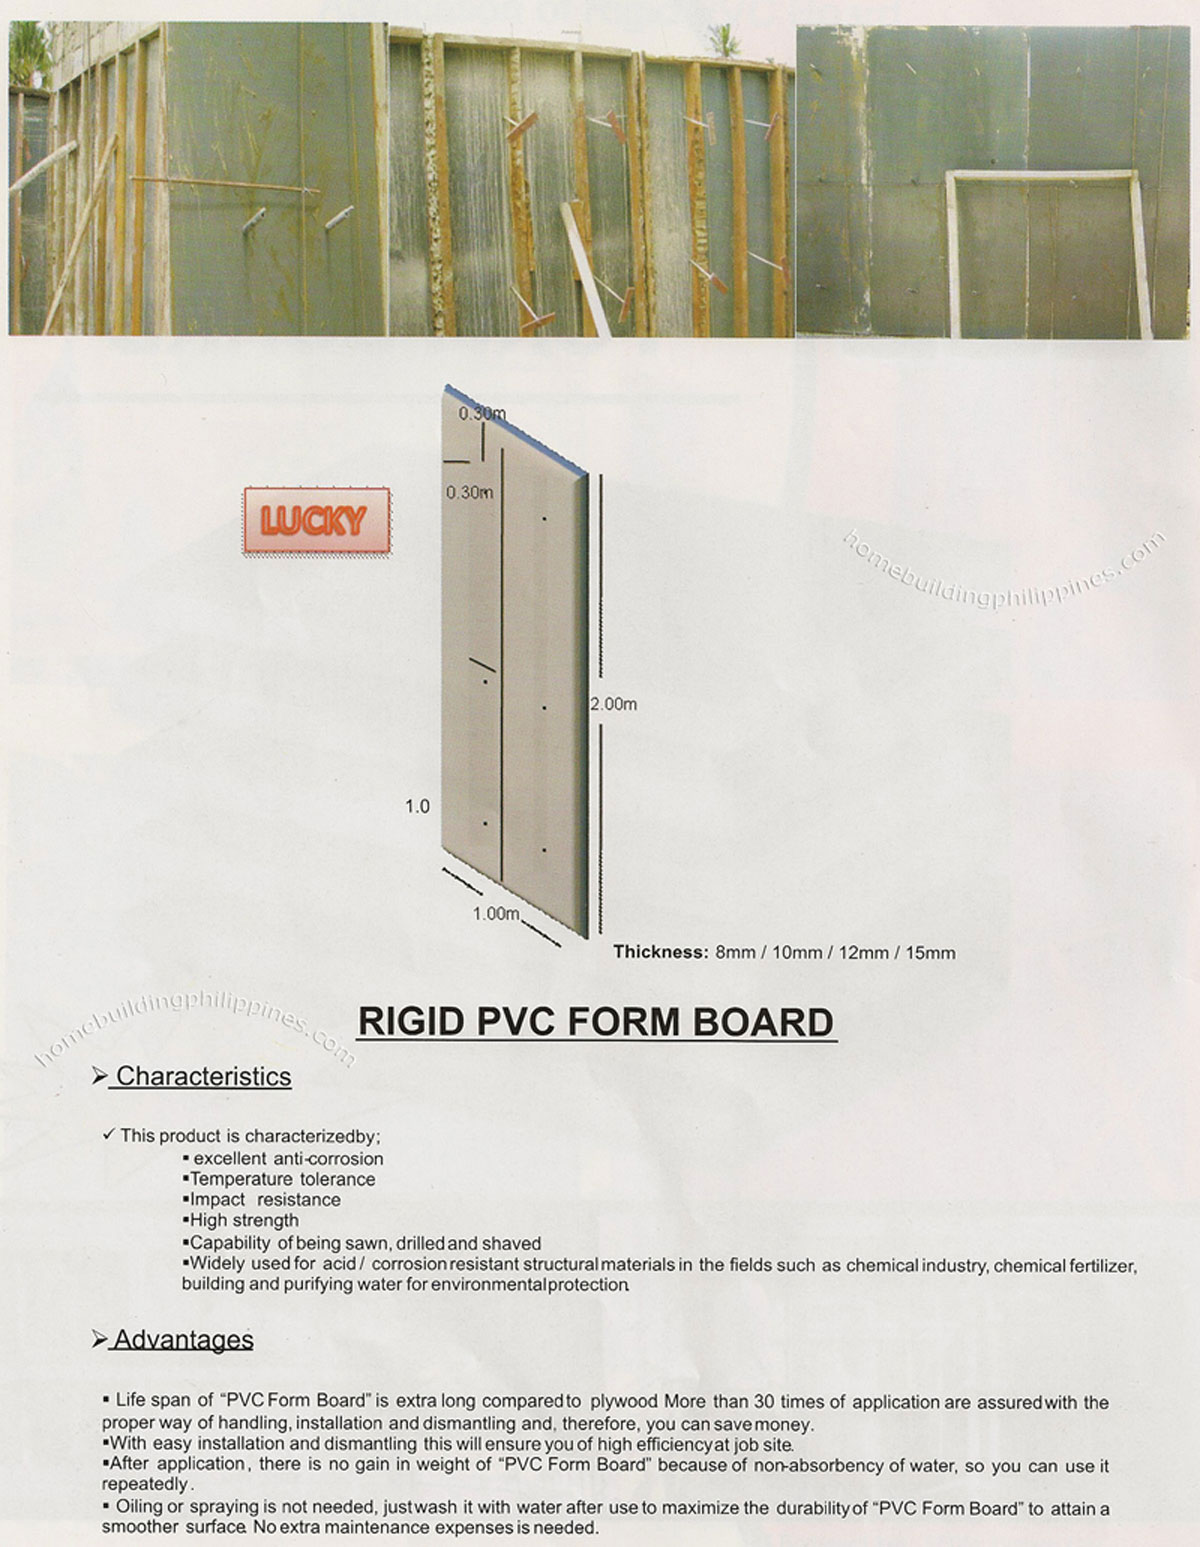 Rigid PVC Form Board Characteristics